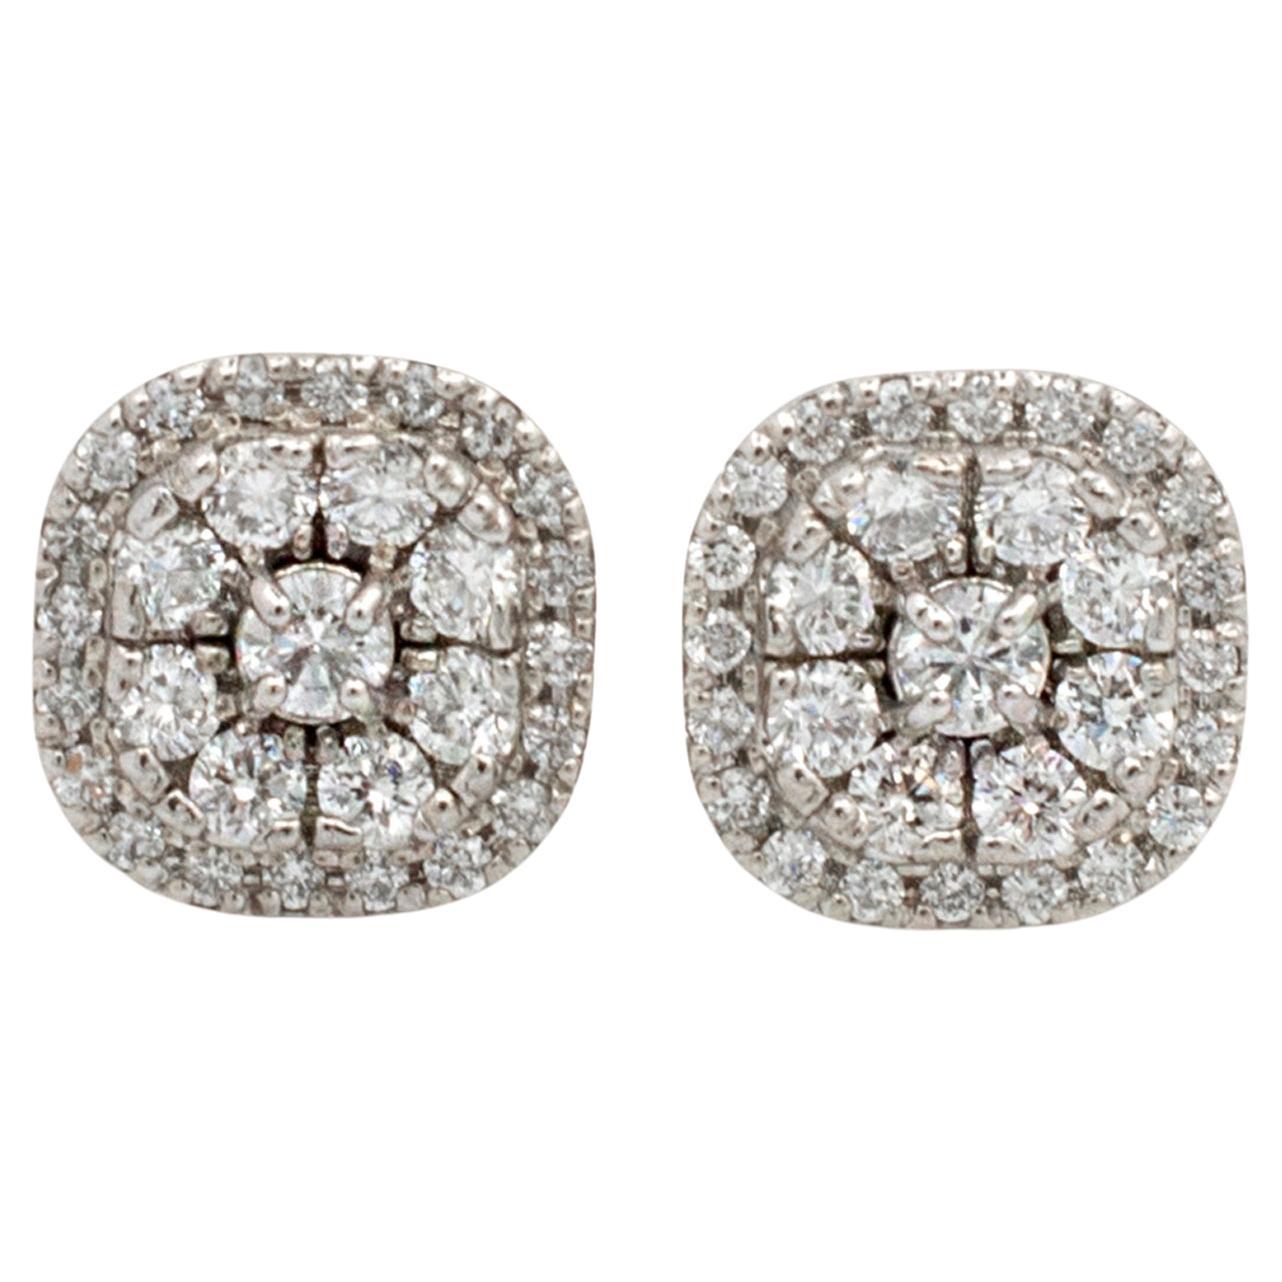 Ladies 14K White Gold Cushion Shaped Cluster Diamond Stud Earrings